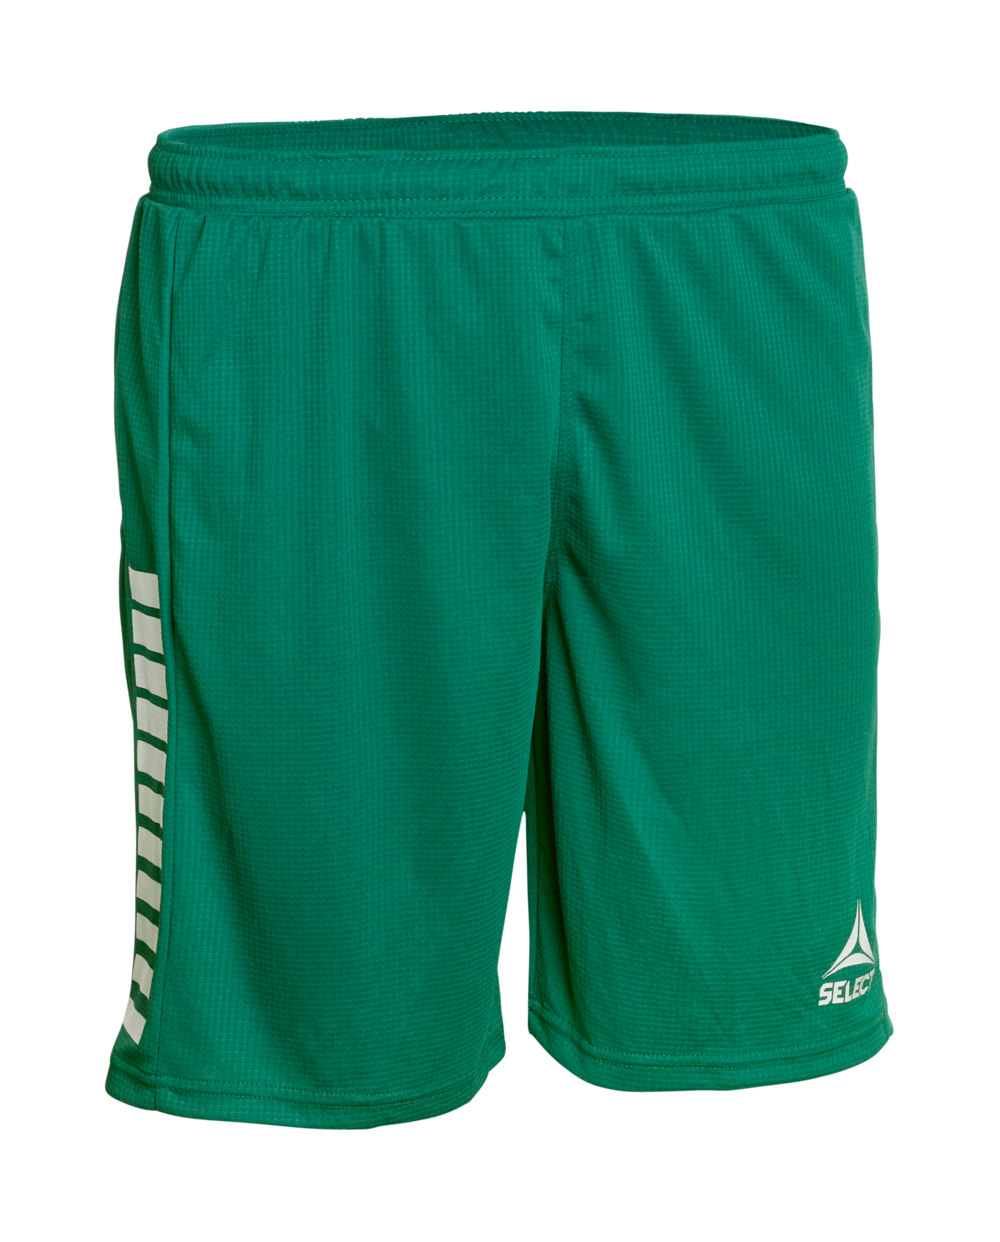 monaco_player_shorts_green